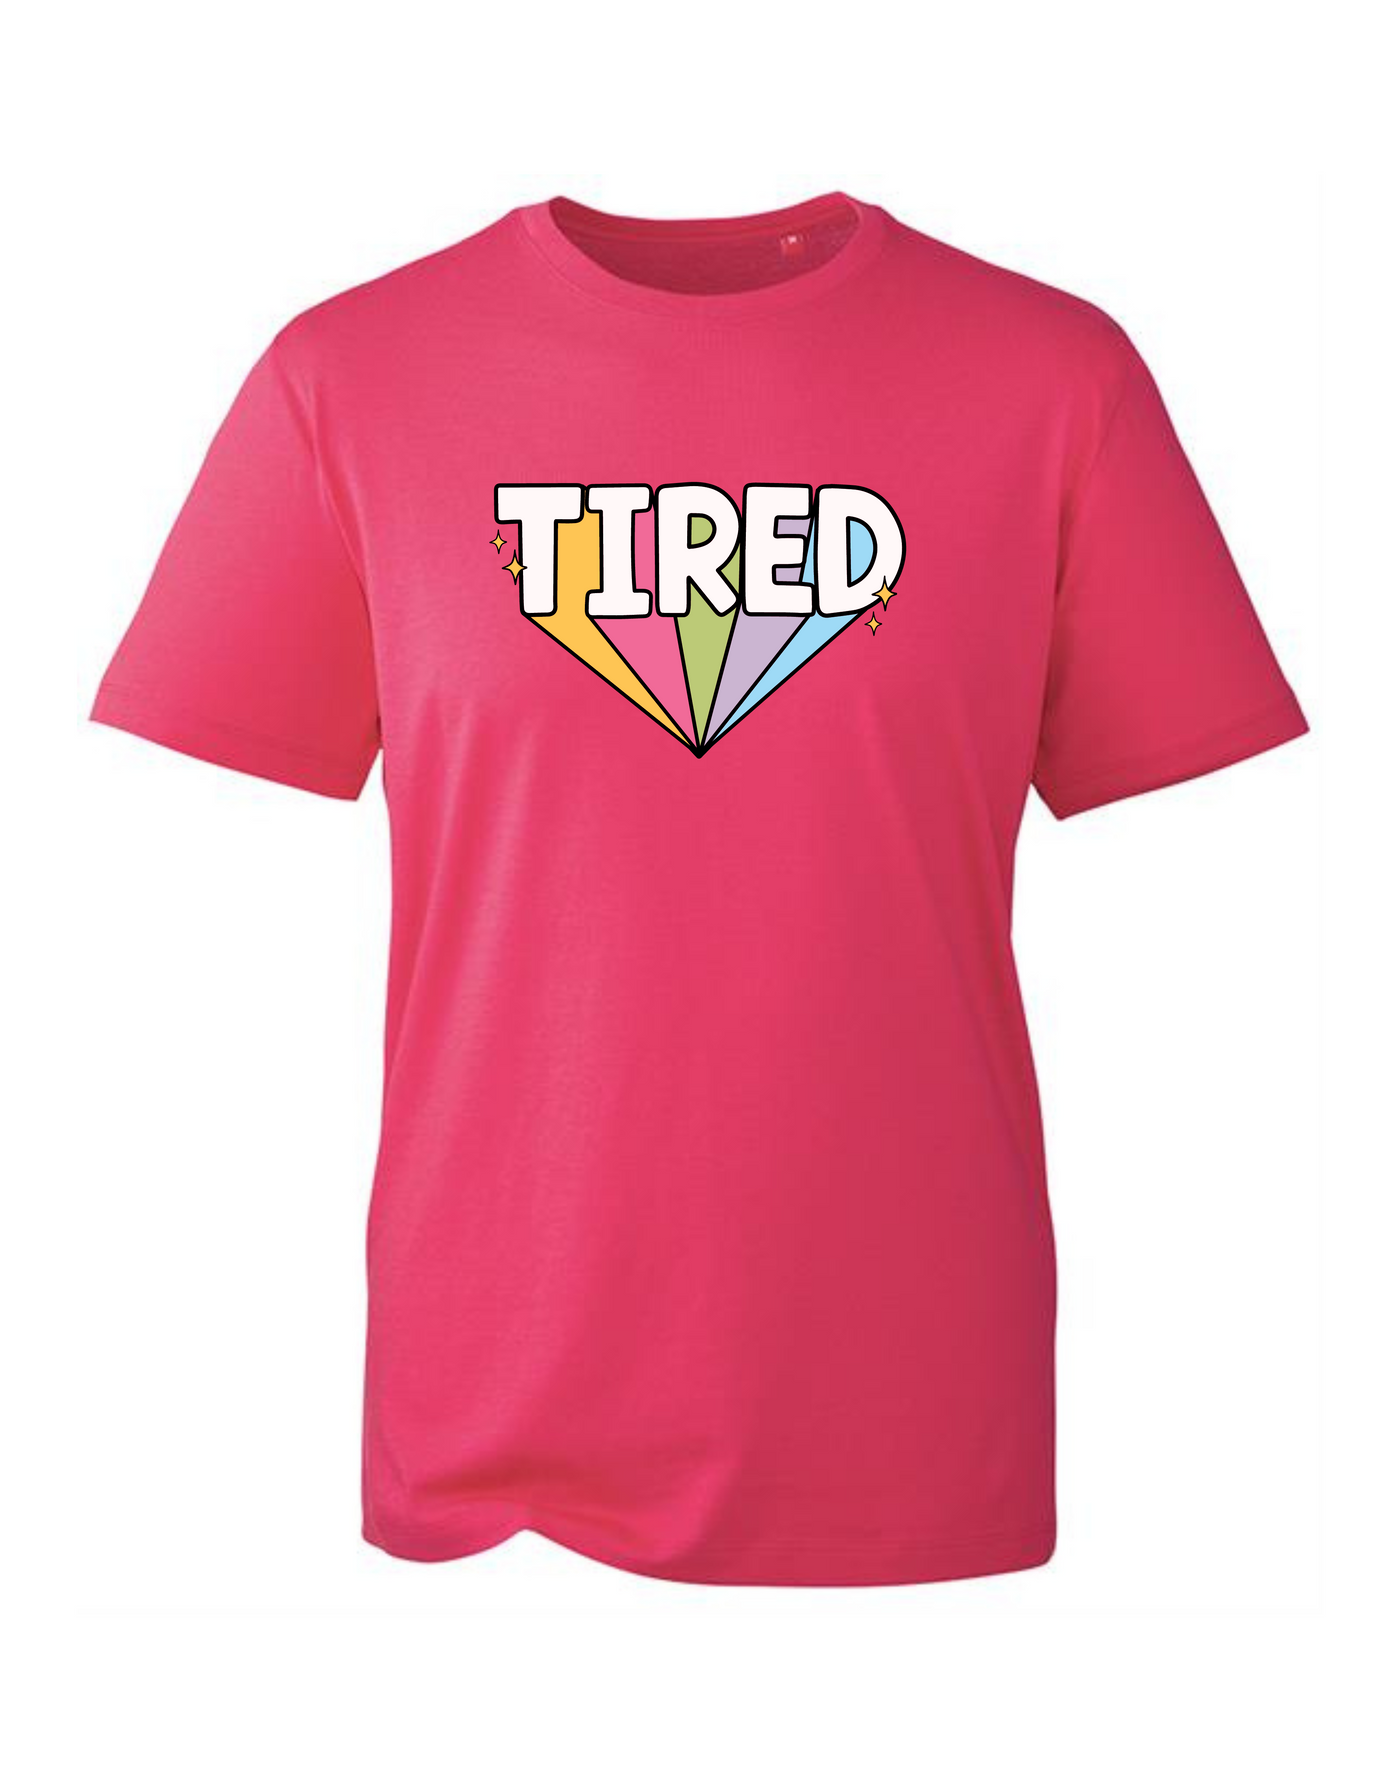 Hot Pink "Tired" Unisex Organic T-Shirt